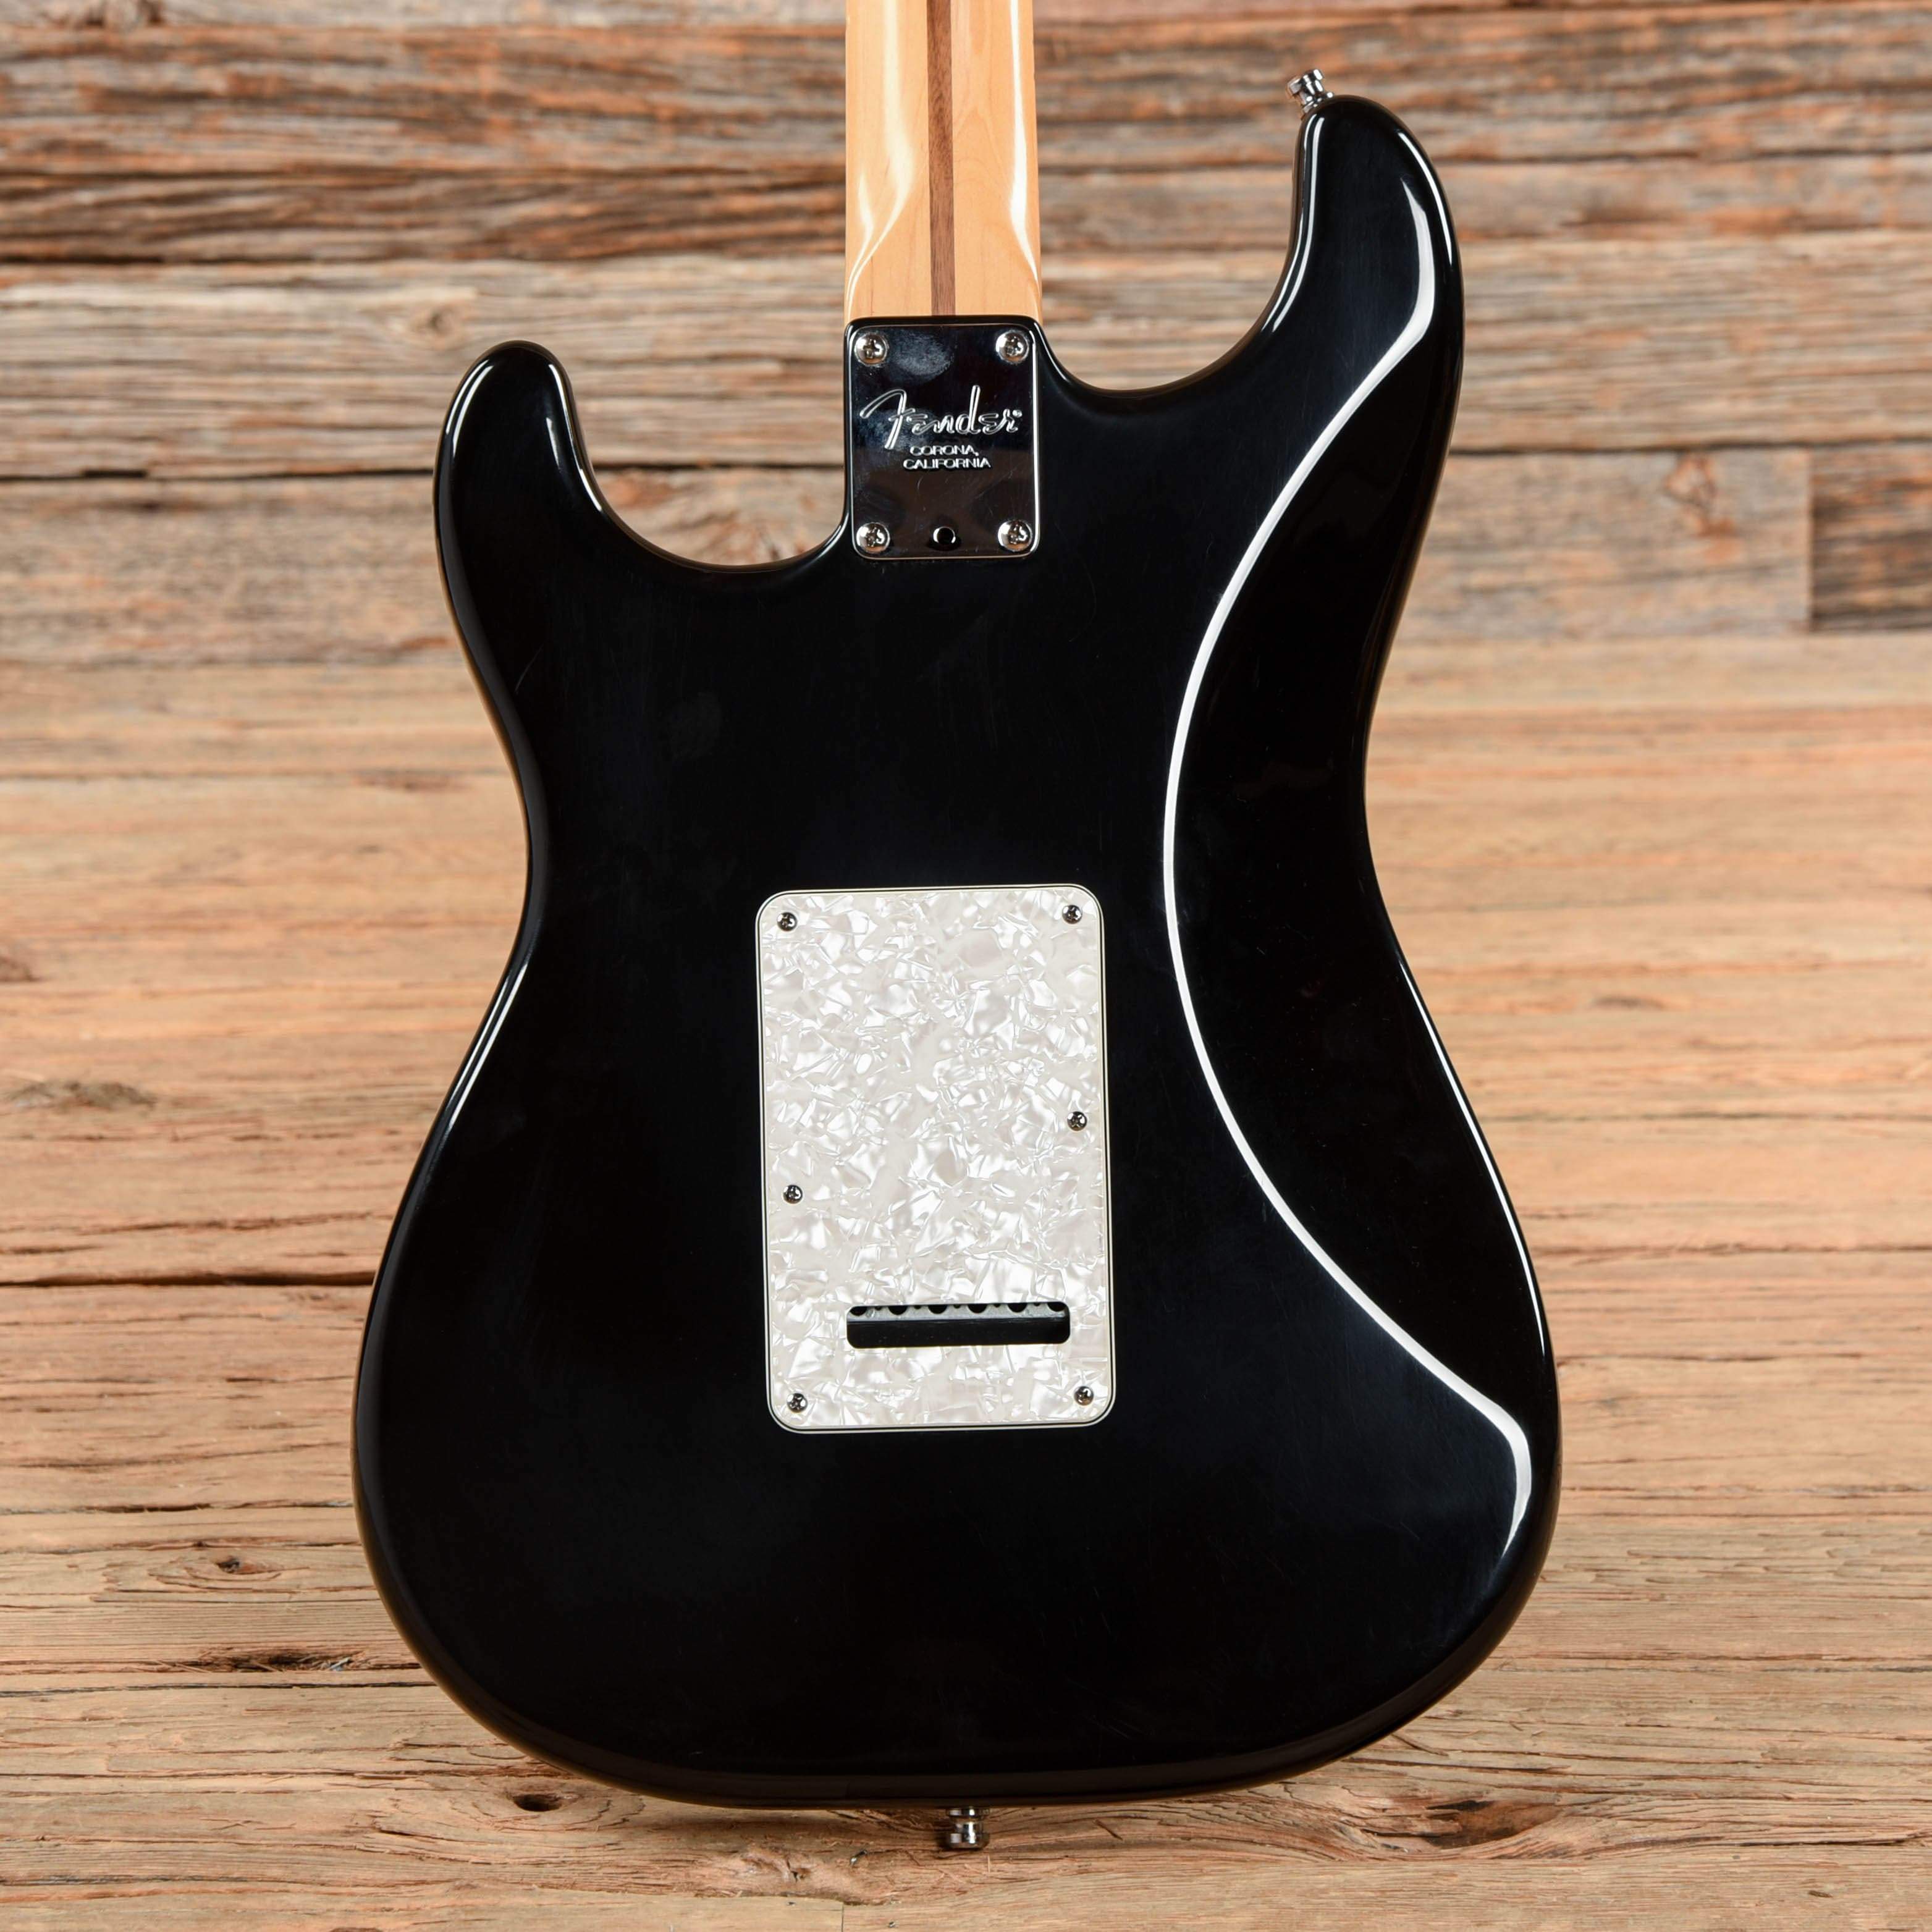 Fender American Fat Stratocaster Texas Special Black 2001 